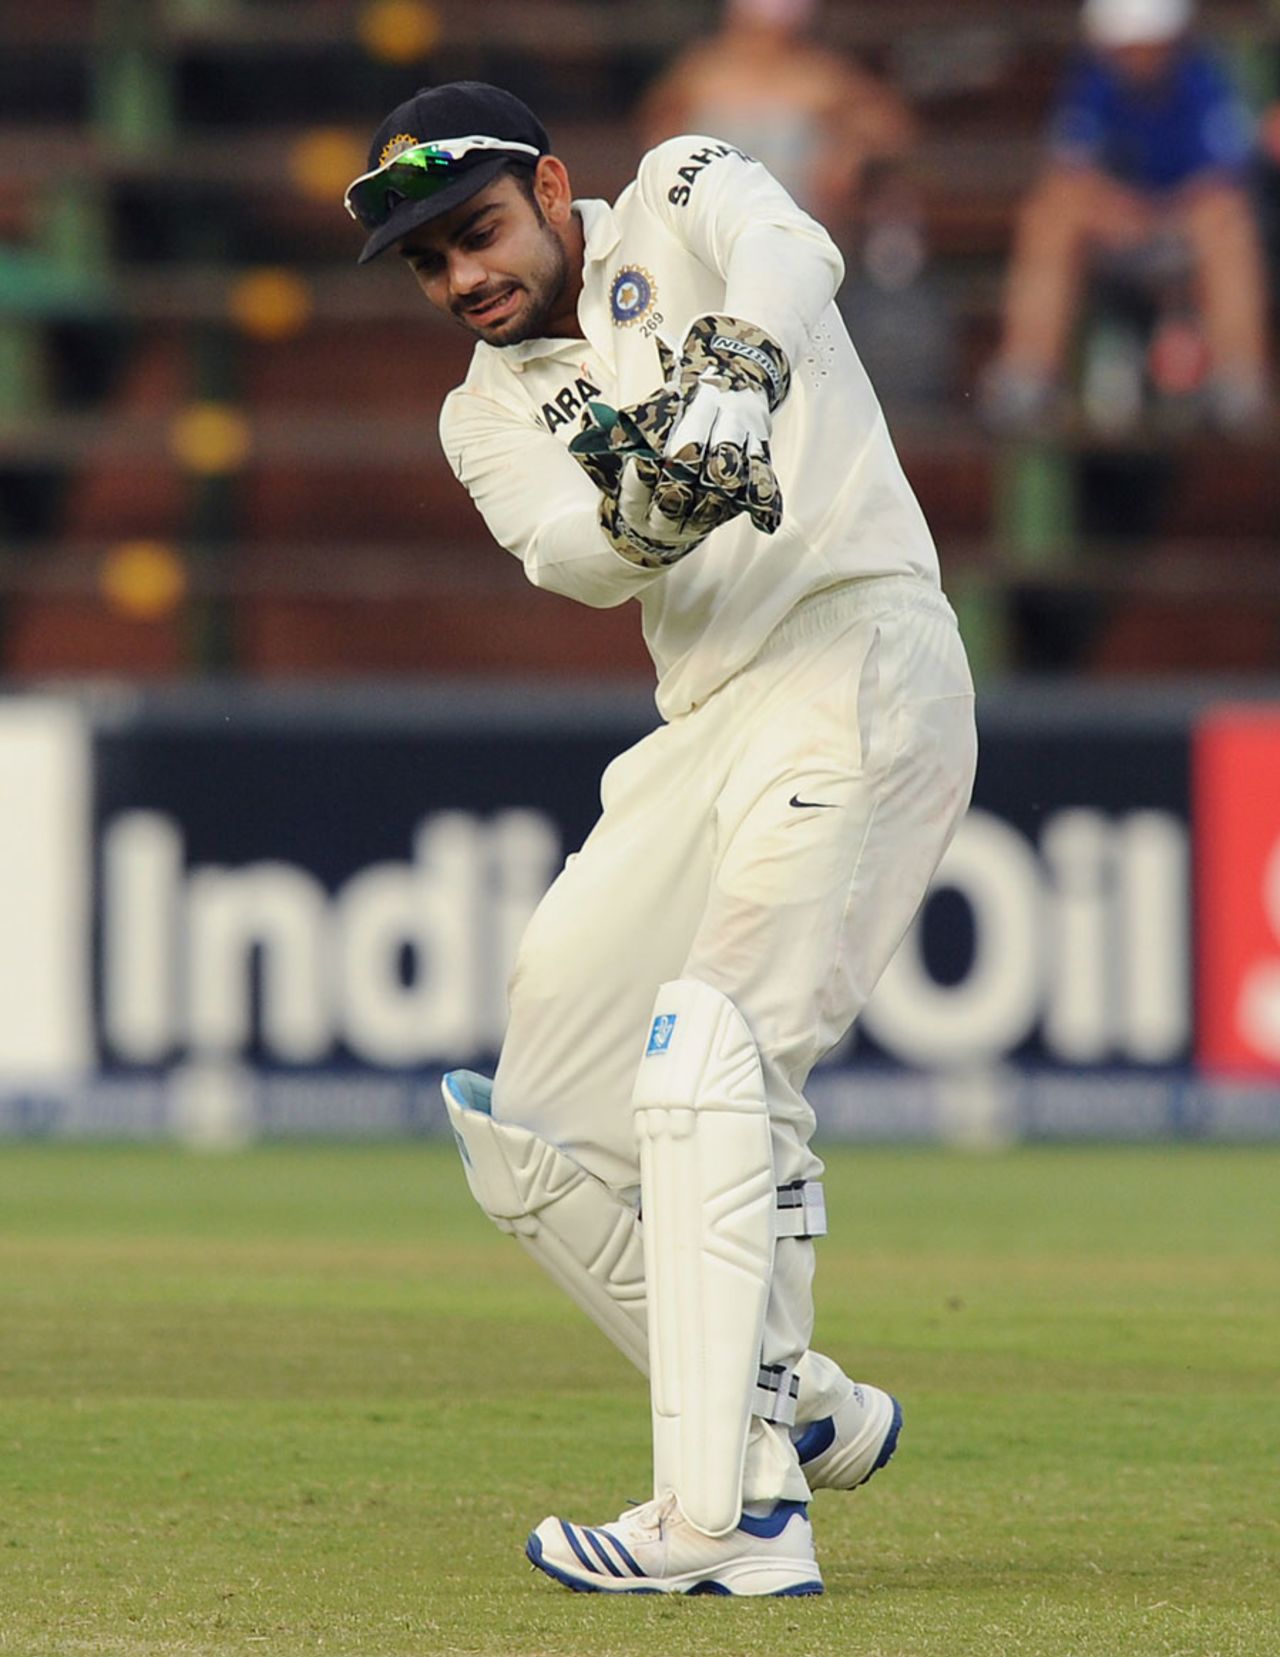 Virat Kohli keeps wickets, South Africa v India, 1st Test, Johannesburg, 4th day, December 21, 2013